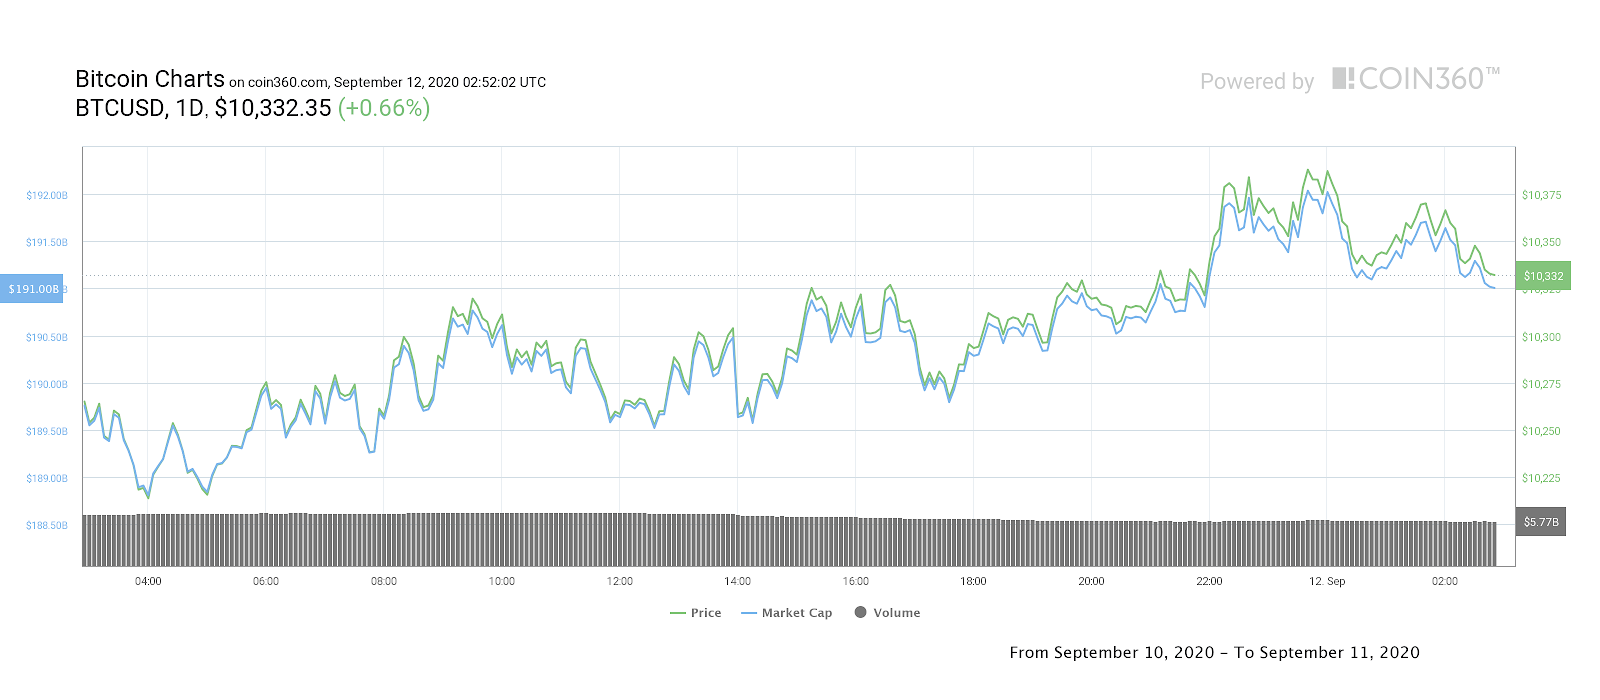 Bitcoin price daily performance